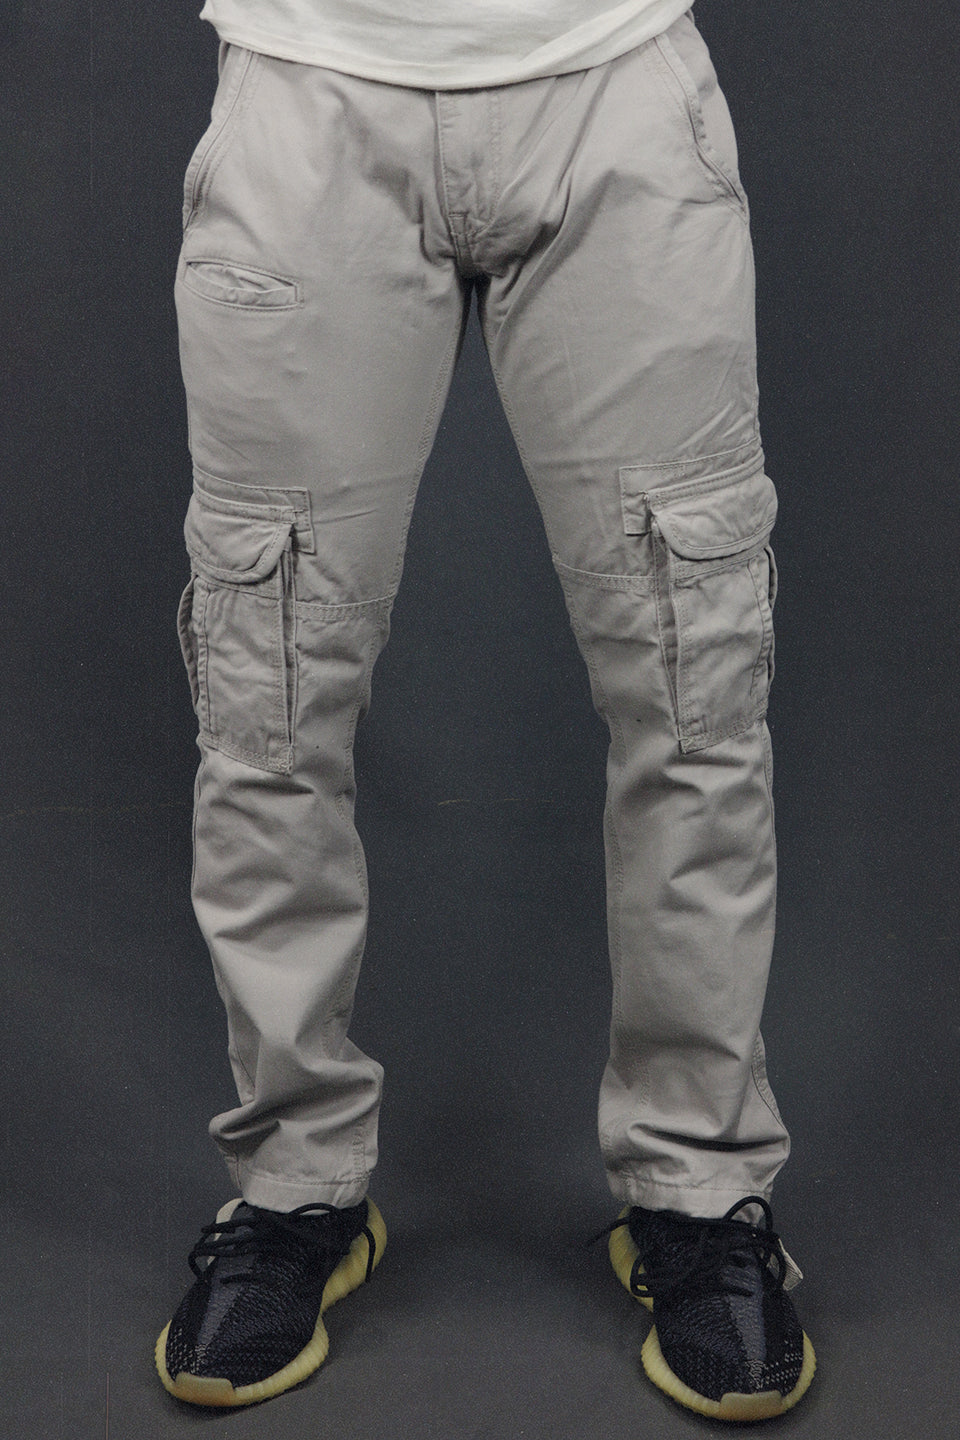 Men's Cement Combat Pants Six Pocket Cargo Pants To Match Sneakers | Cement